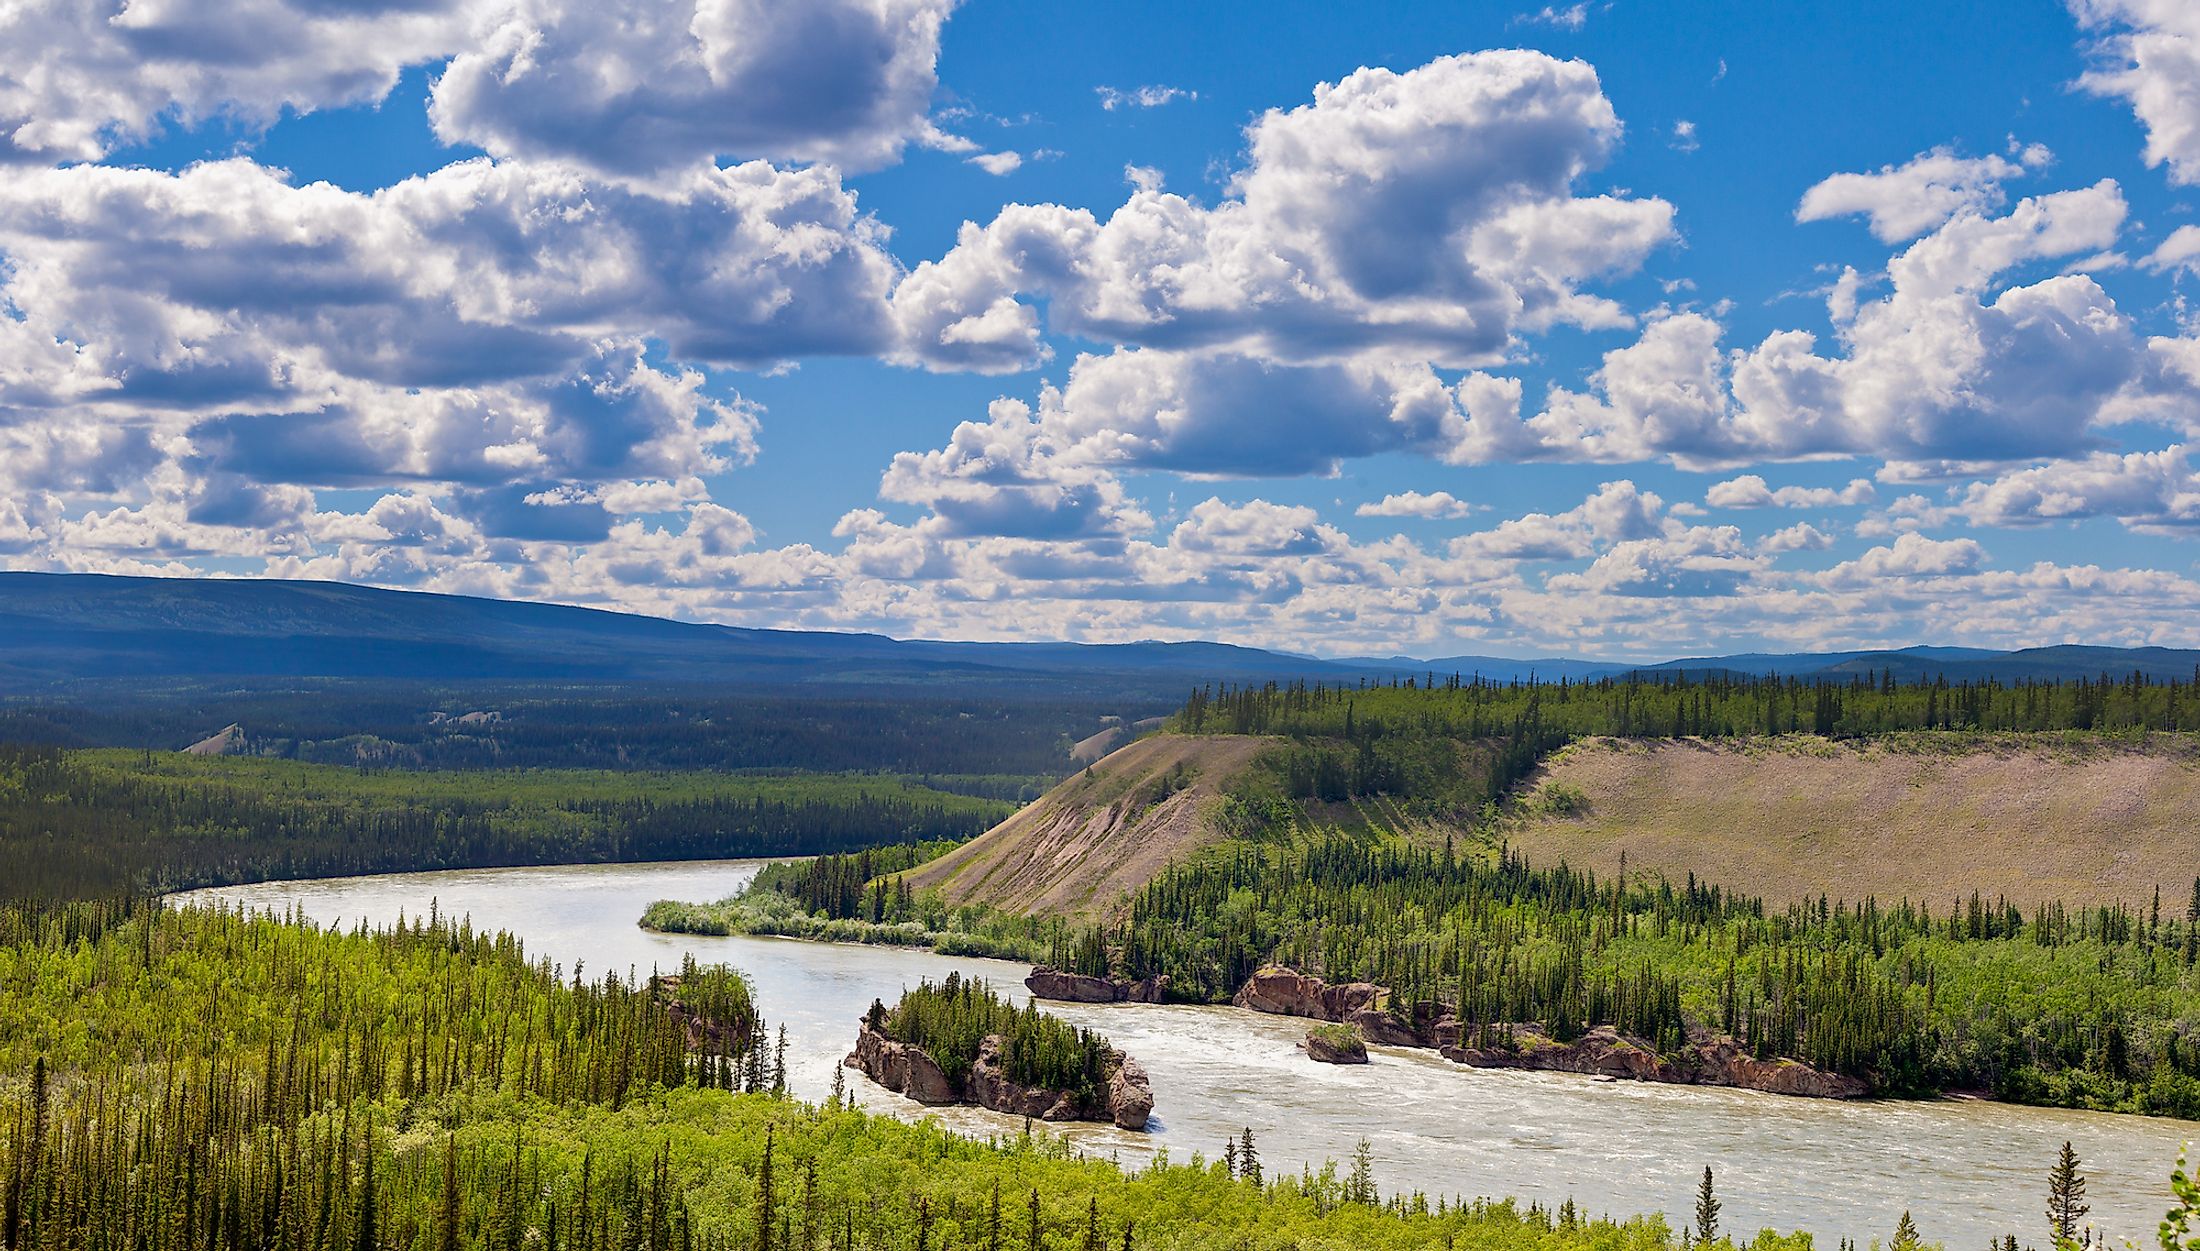 Five Finger Rapids of the Yukon River in Yukon Territory, Canada.